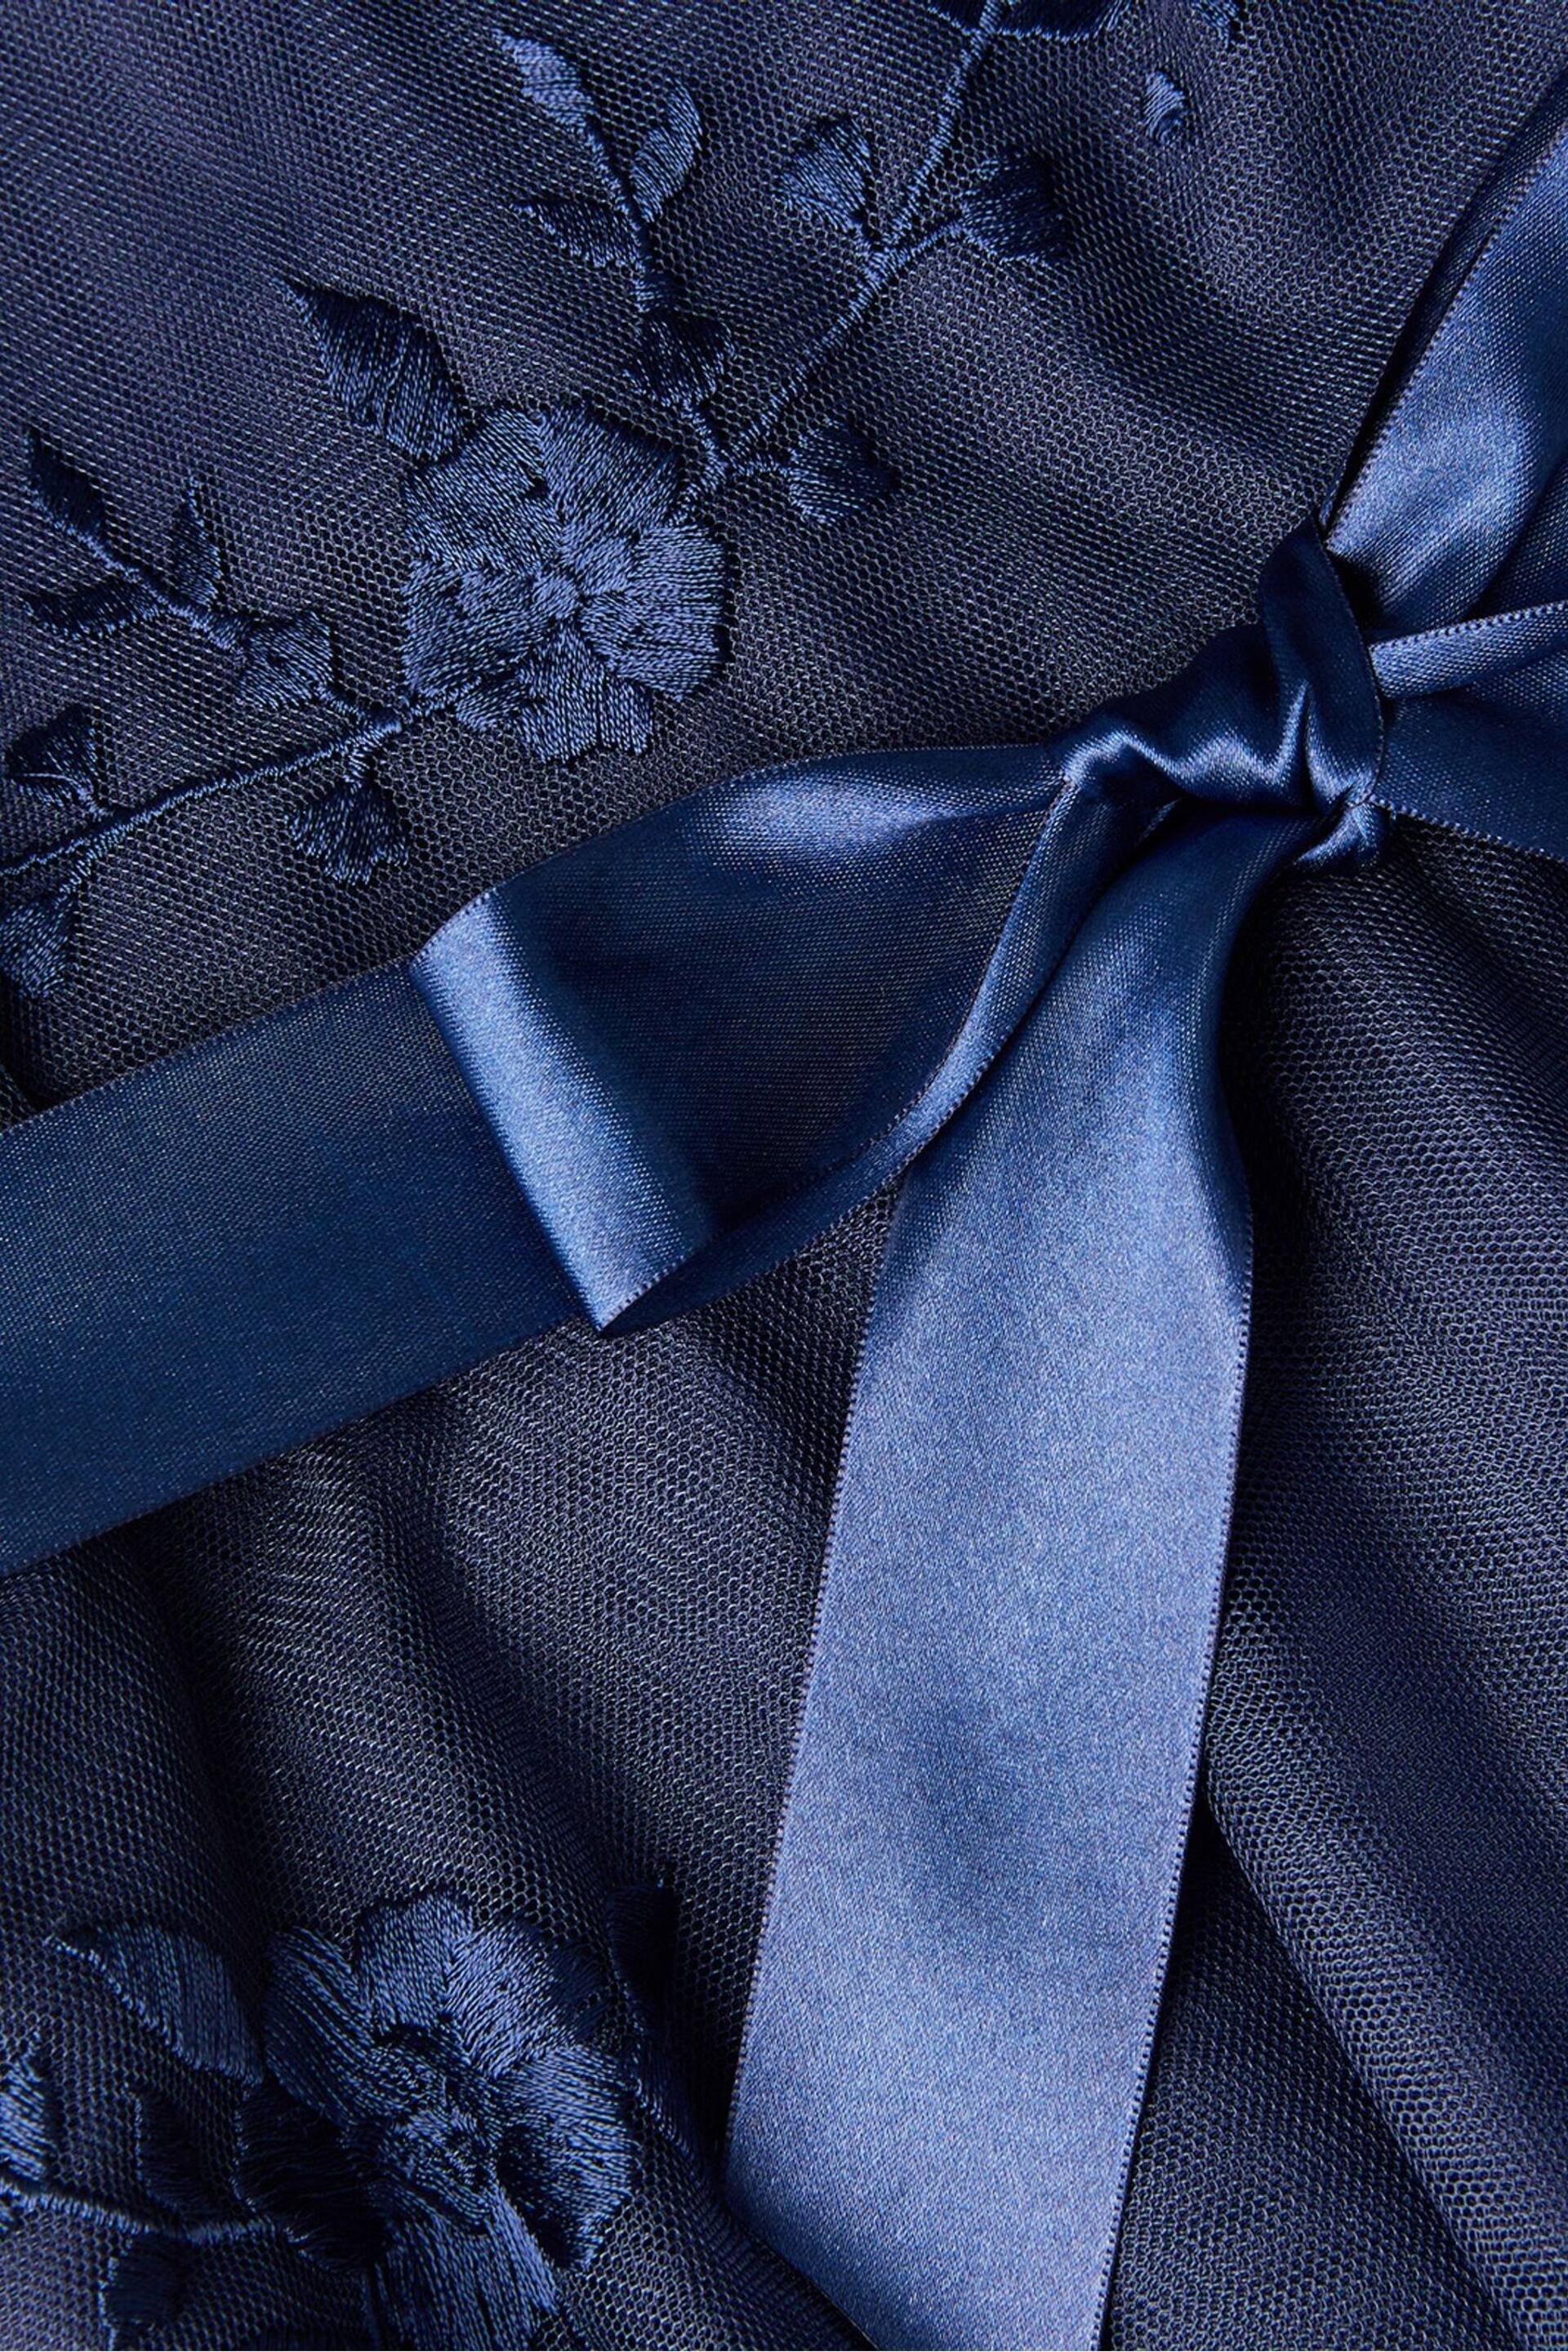 Monsoon Blue Amelia Embroidered Dress - Image 3 of 3